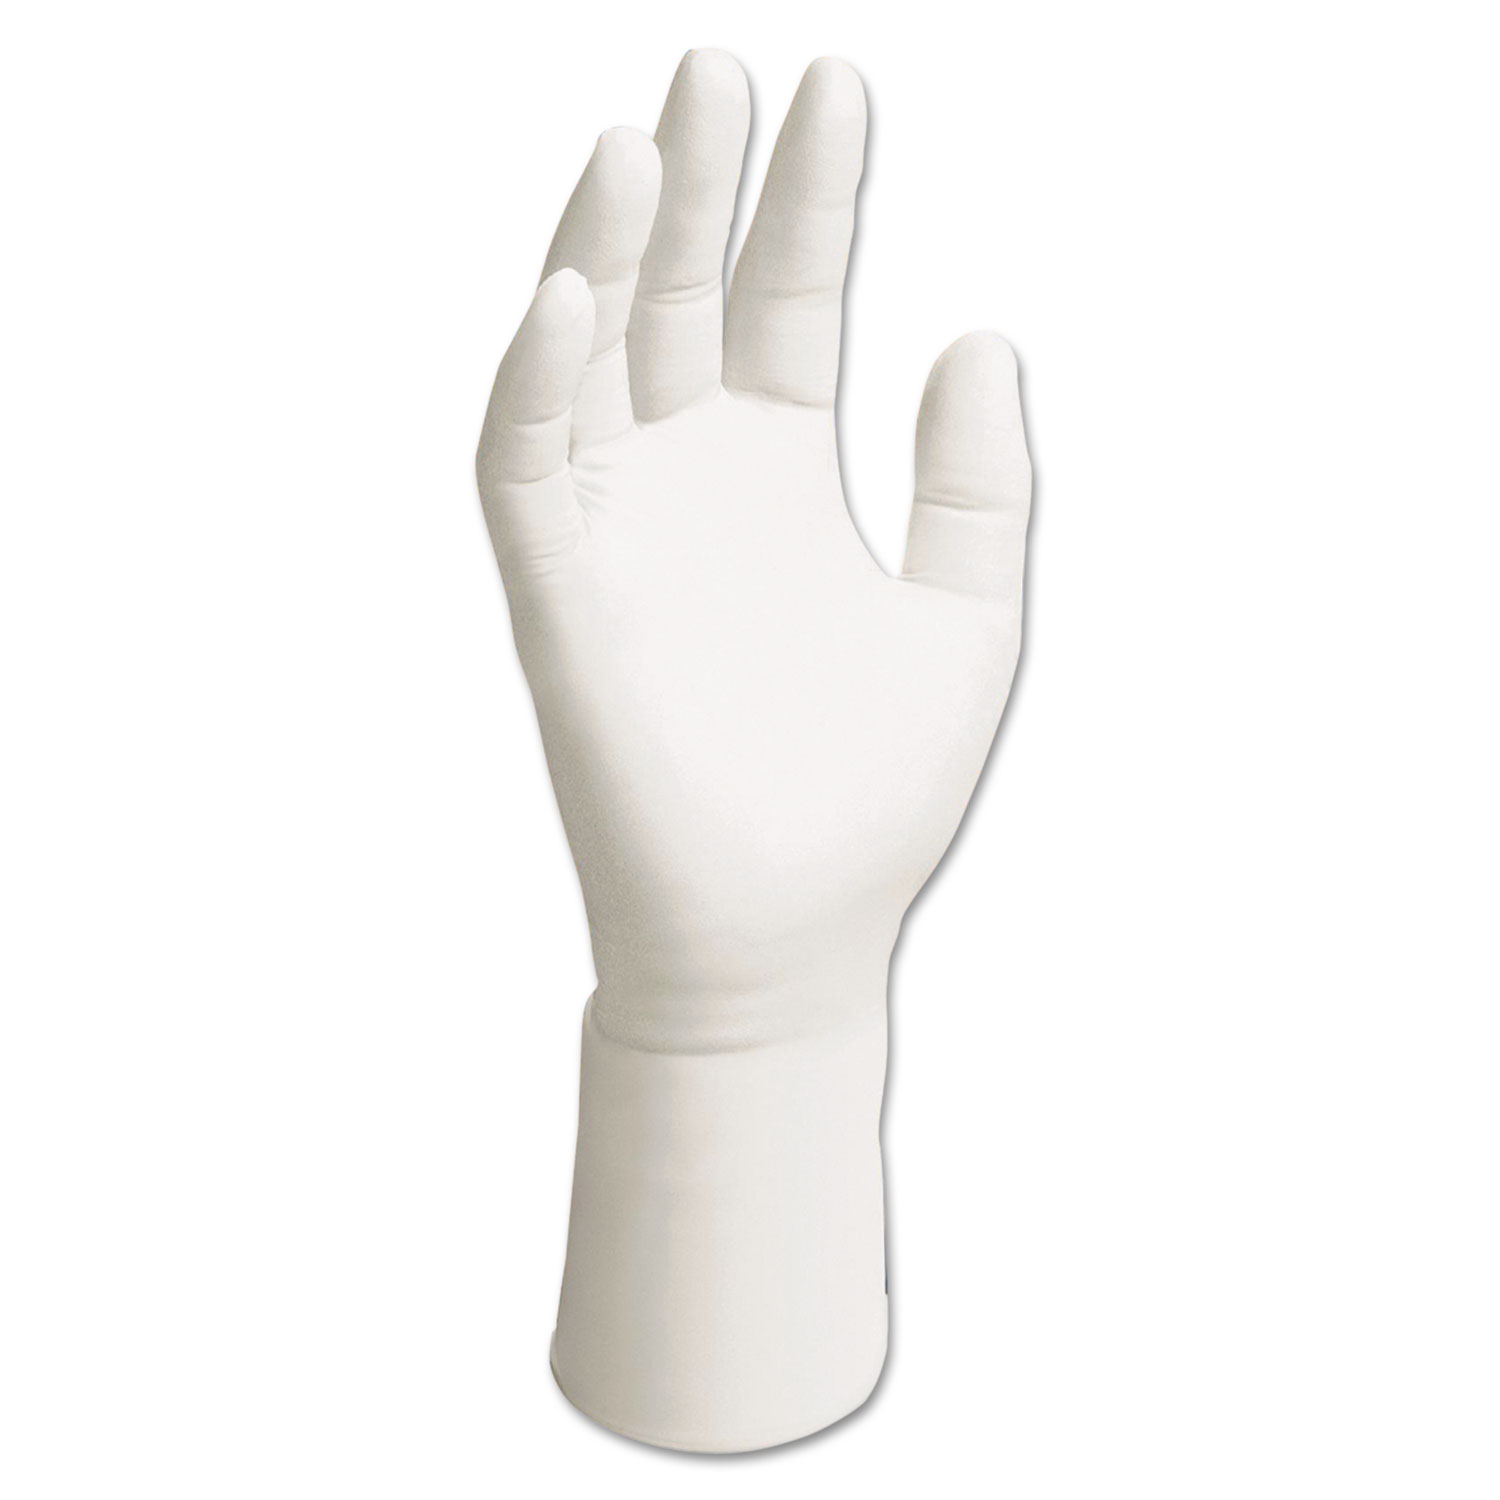  Kimtech KCC 56882 G5 Nitrile Gloves, Powder-Free, 305 mm Length, Medium, White, 1000/Carton (KCC56882) 